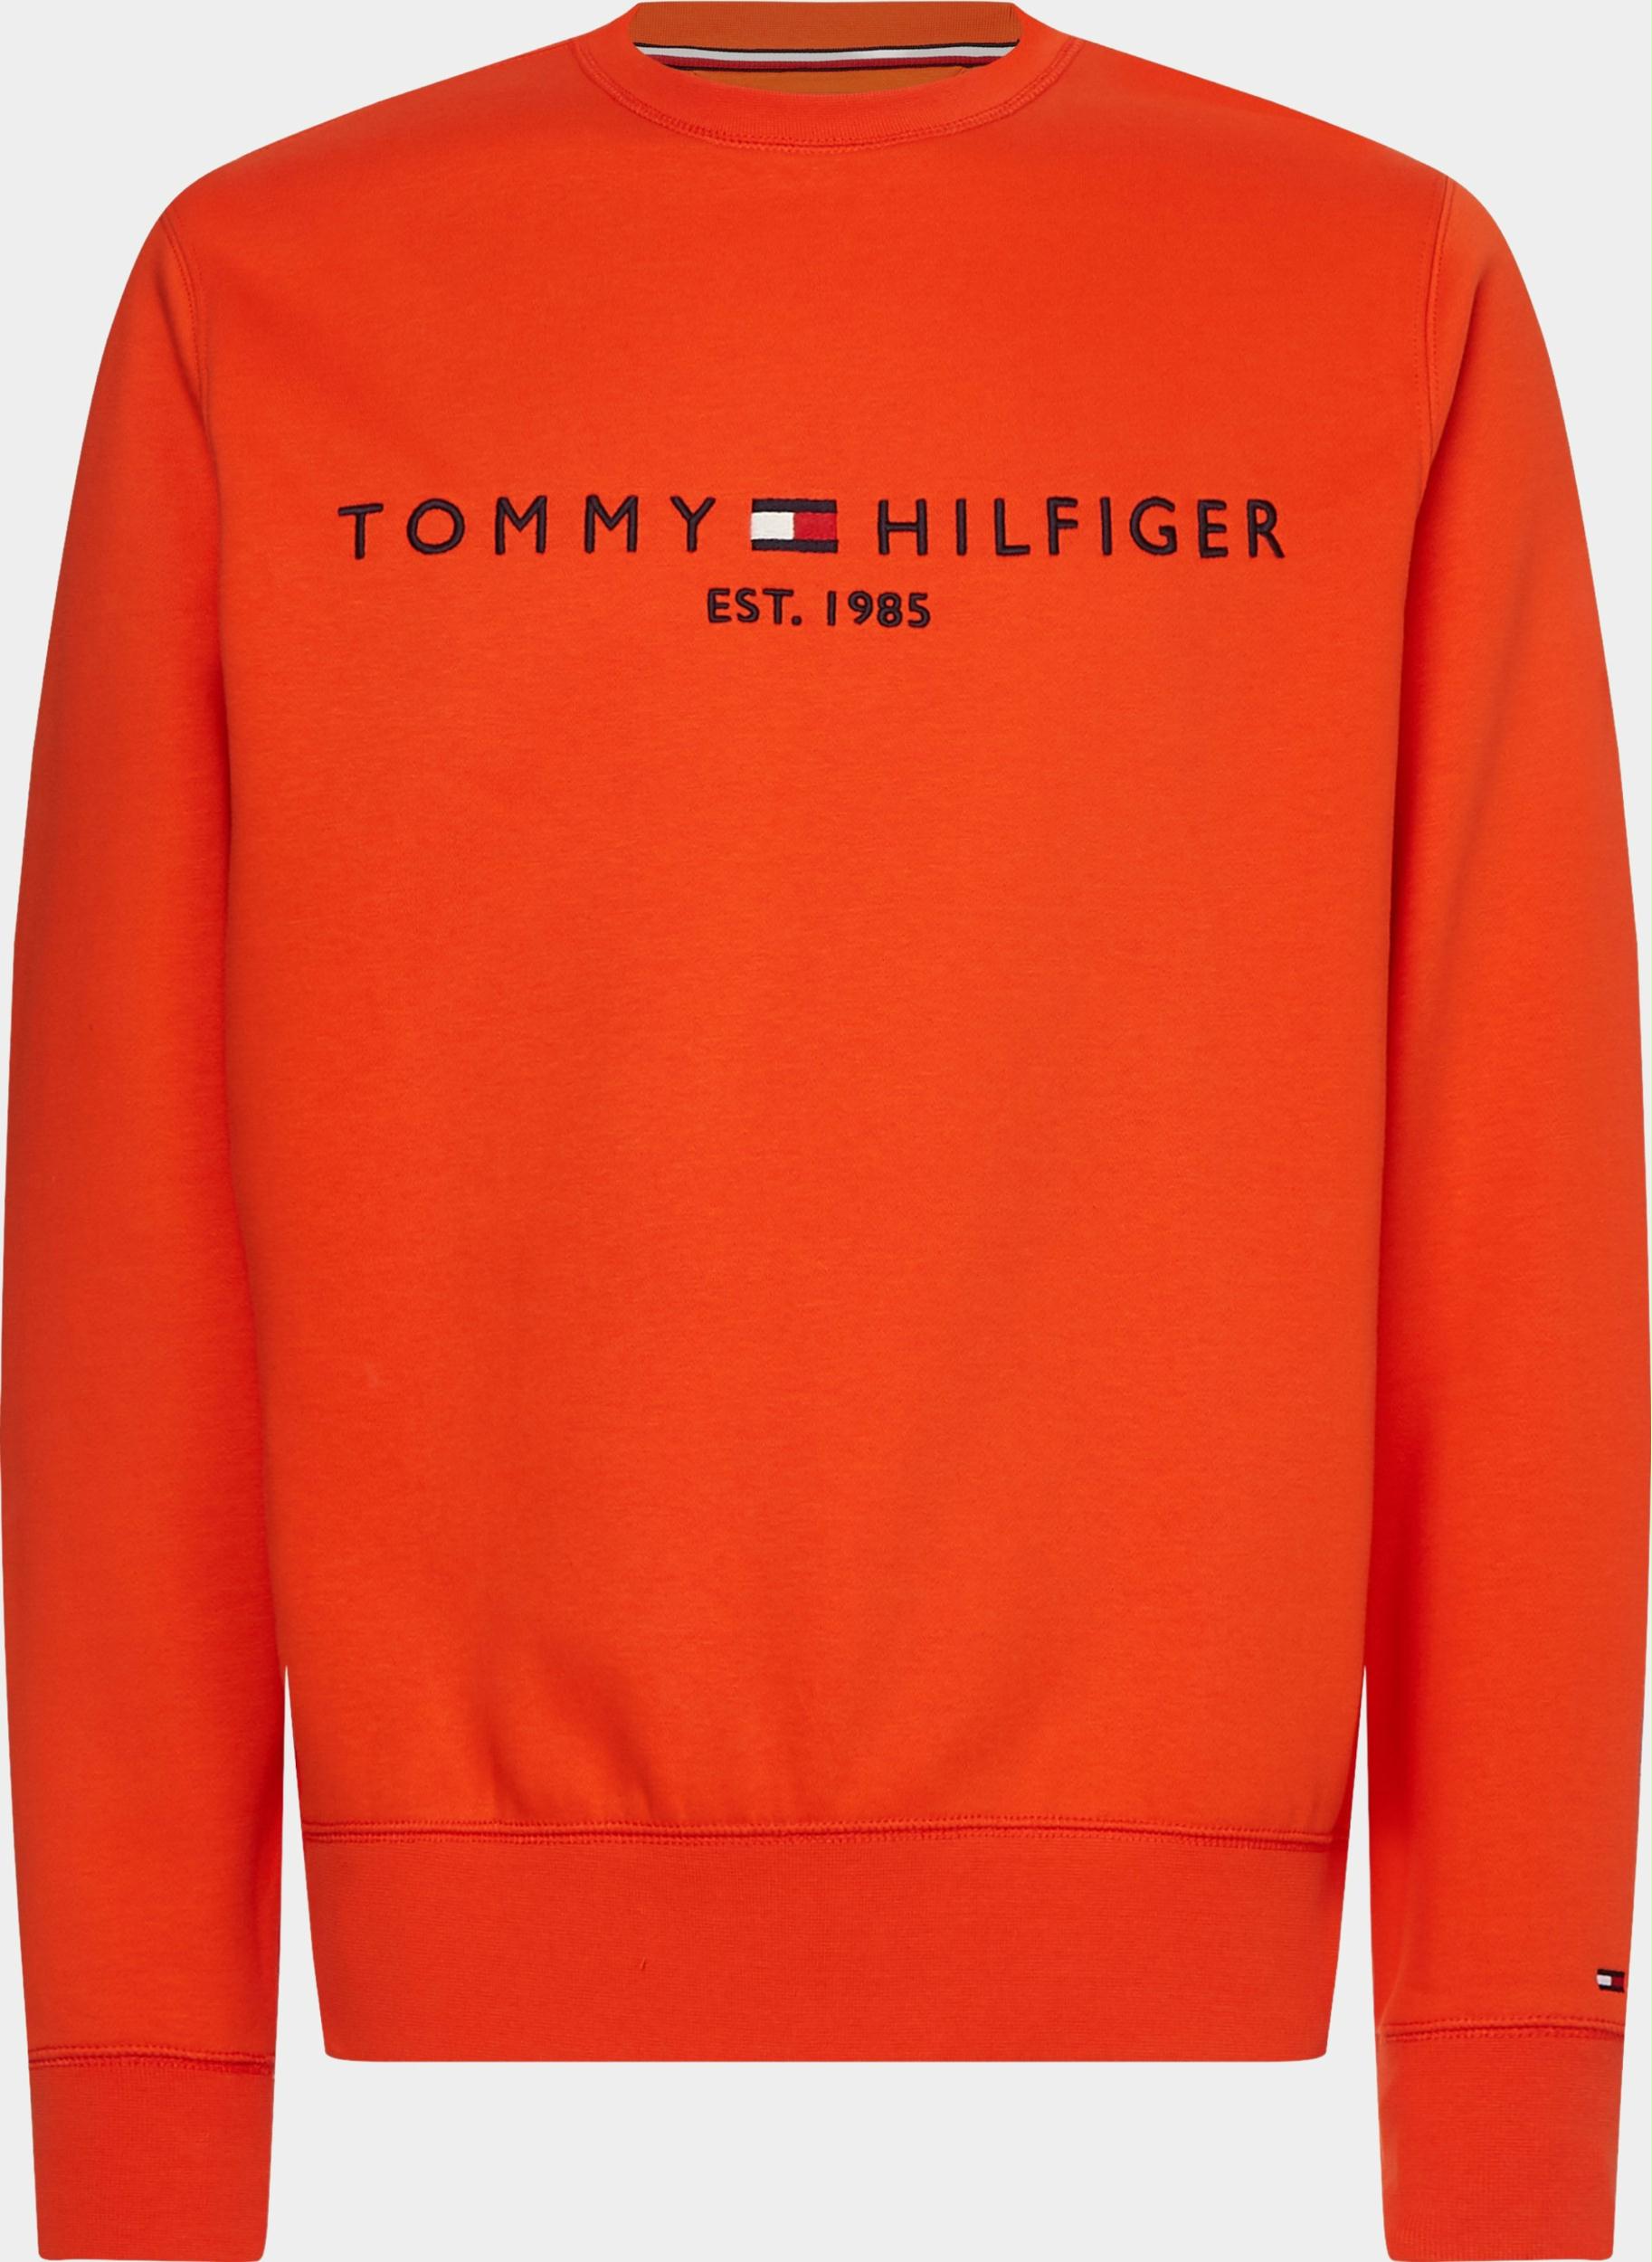 40% Tommy Hilfiger Sweater Oranje Tommy Logo Sweatshirt MW0MW11596/SCZ Bos Men Shop